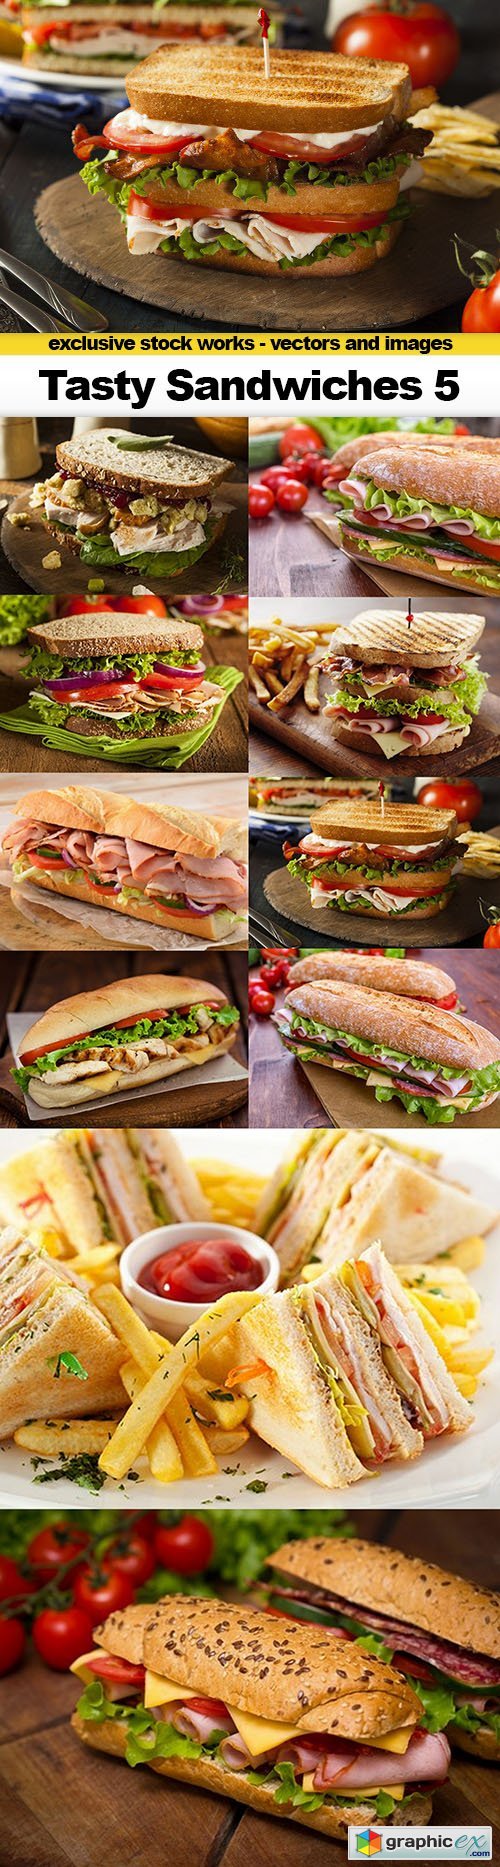 Tasty Sandwiches 5 - 10xUHQ JPEG